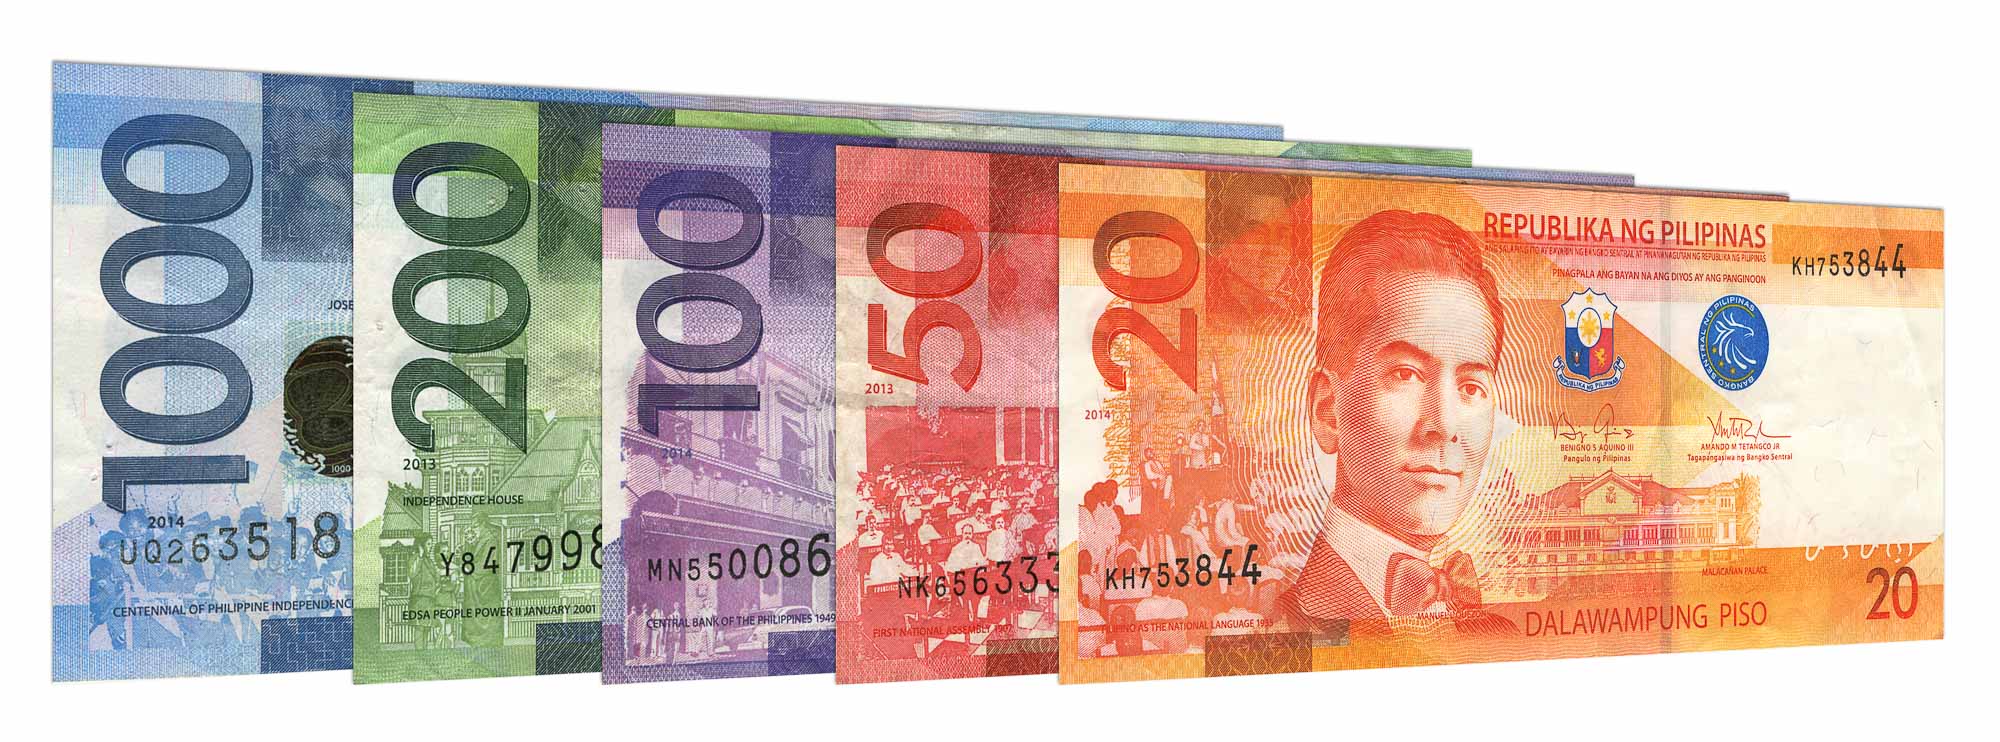 Philippine Peso Banknotes